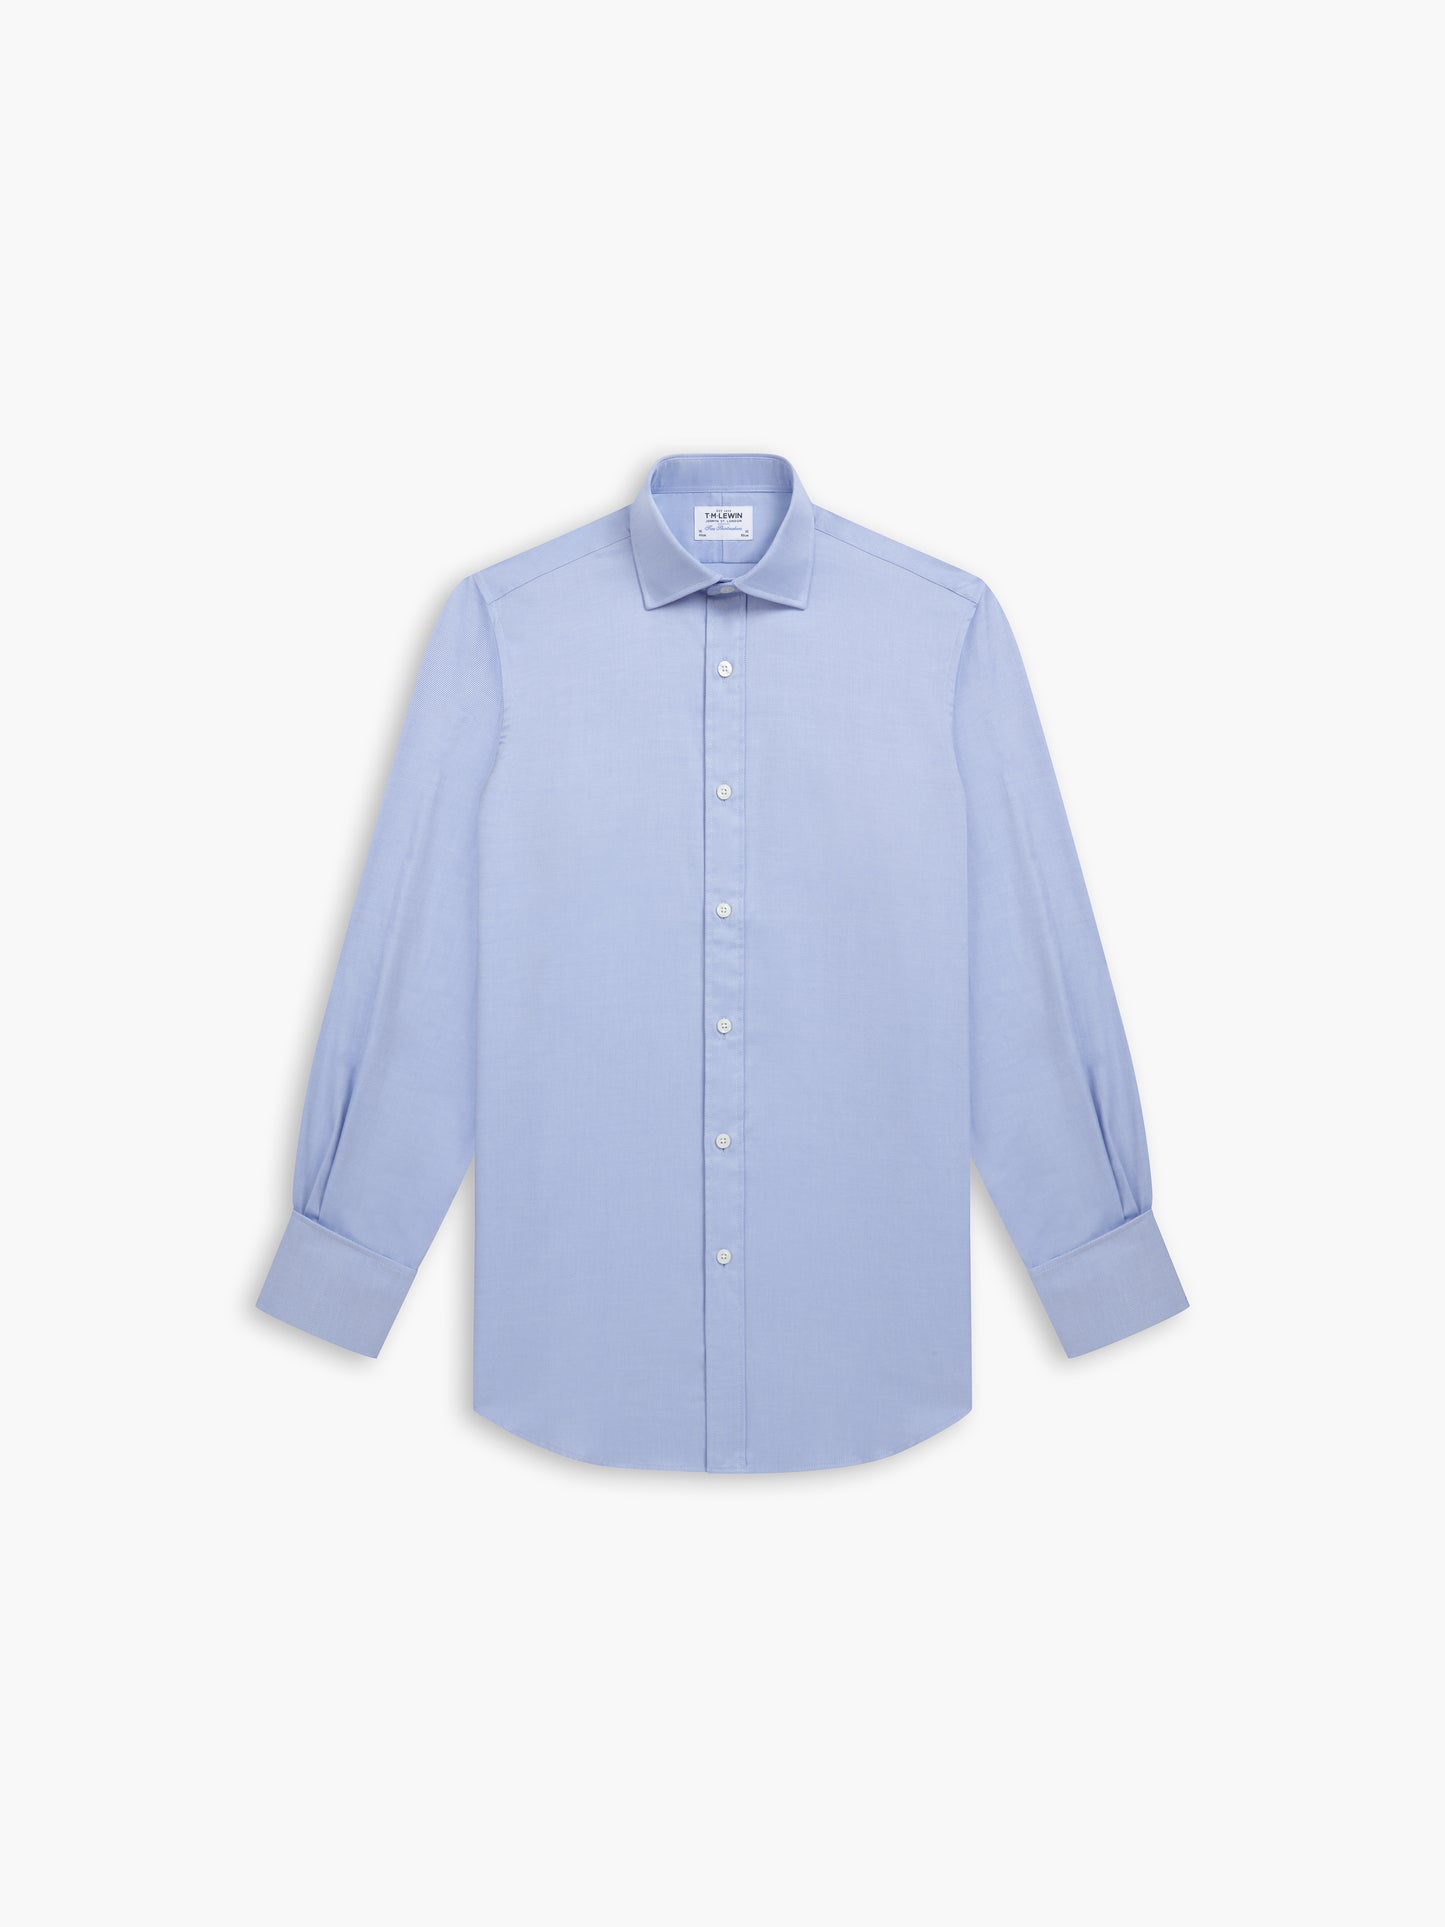 Blue Bold Twill Slim Fit Double Cuff Classic Collar Shirt